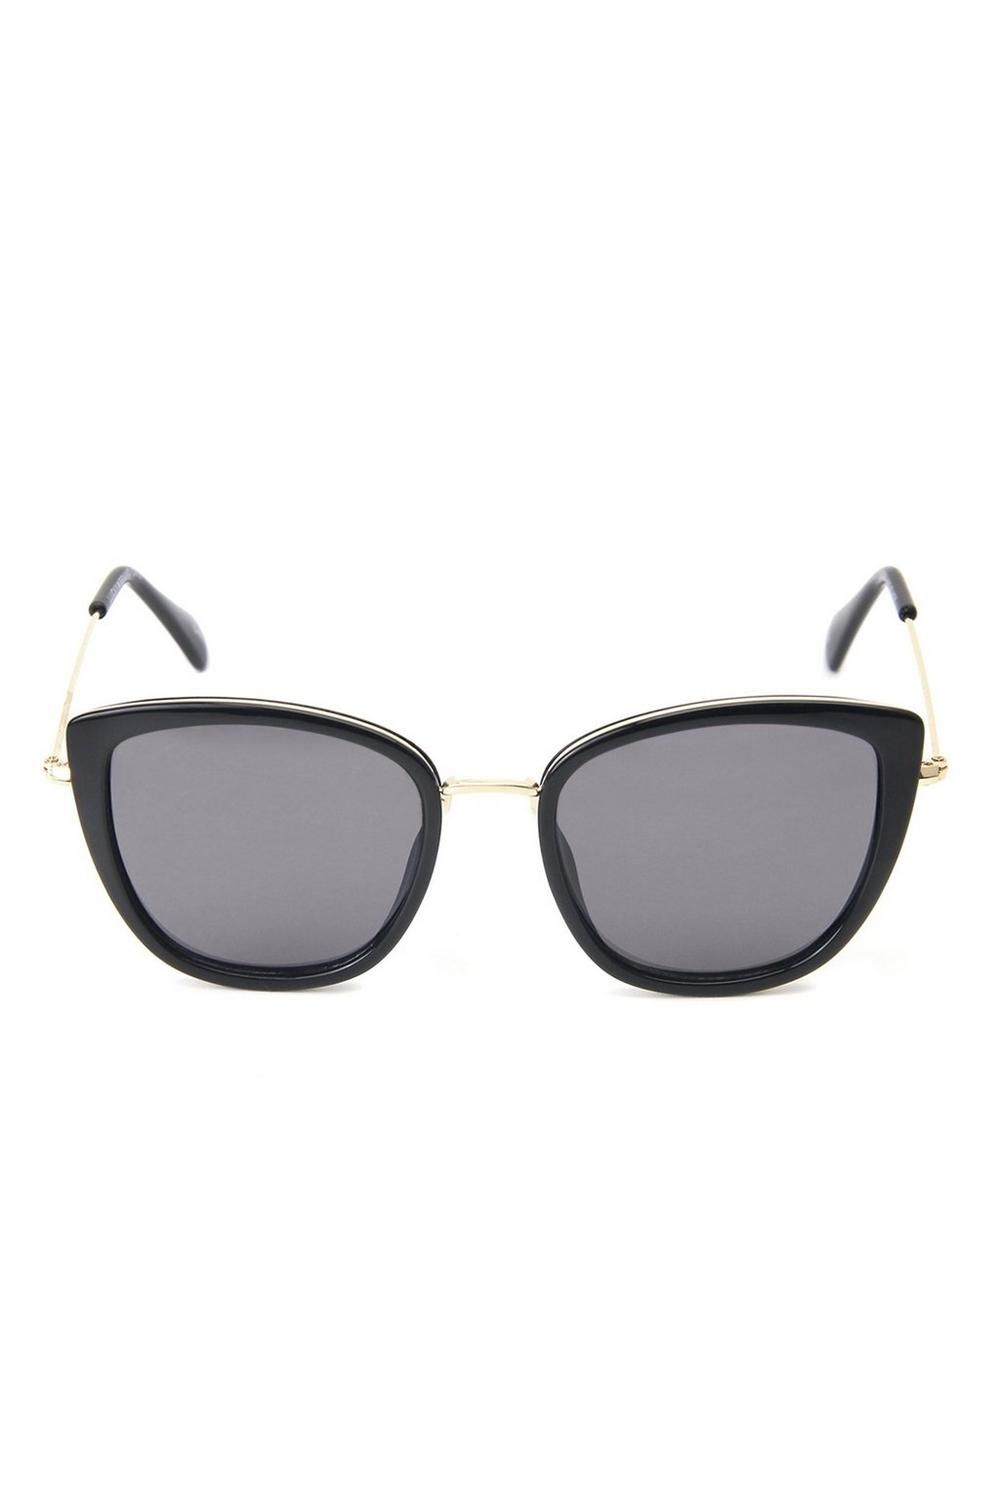 trinity sunglasses | Lucky Brand